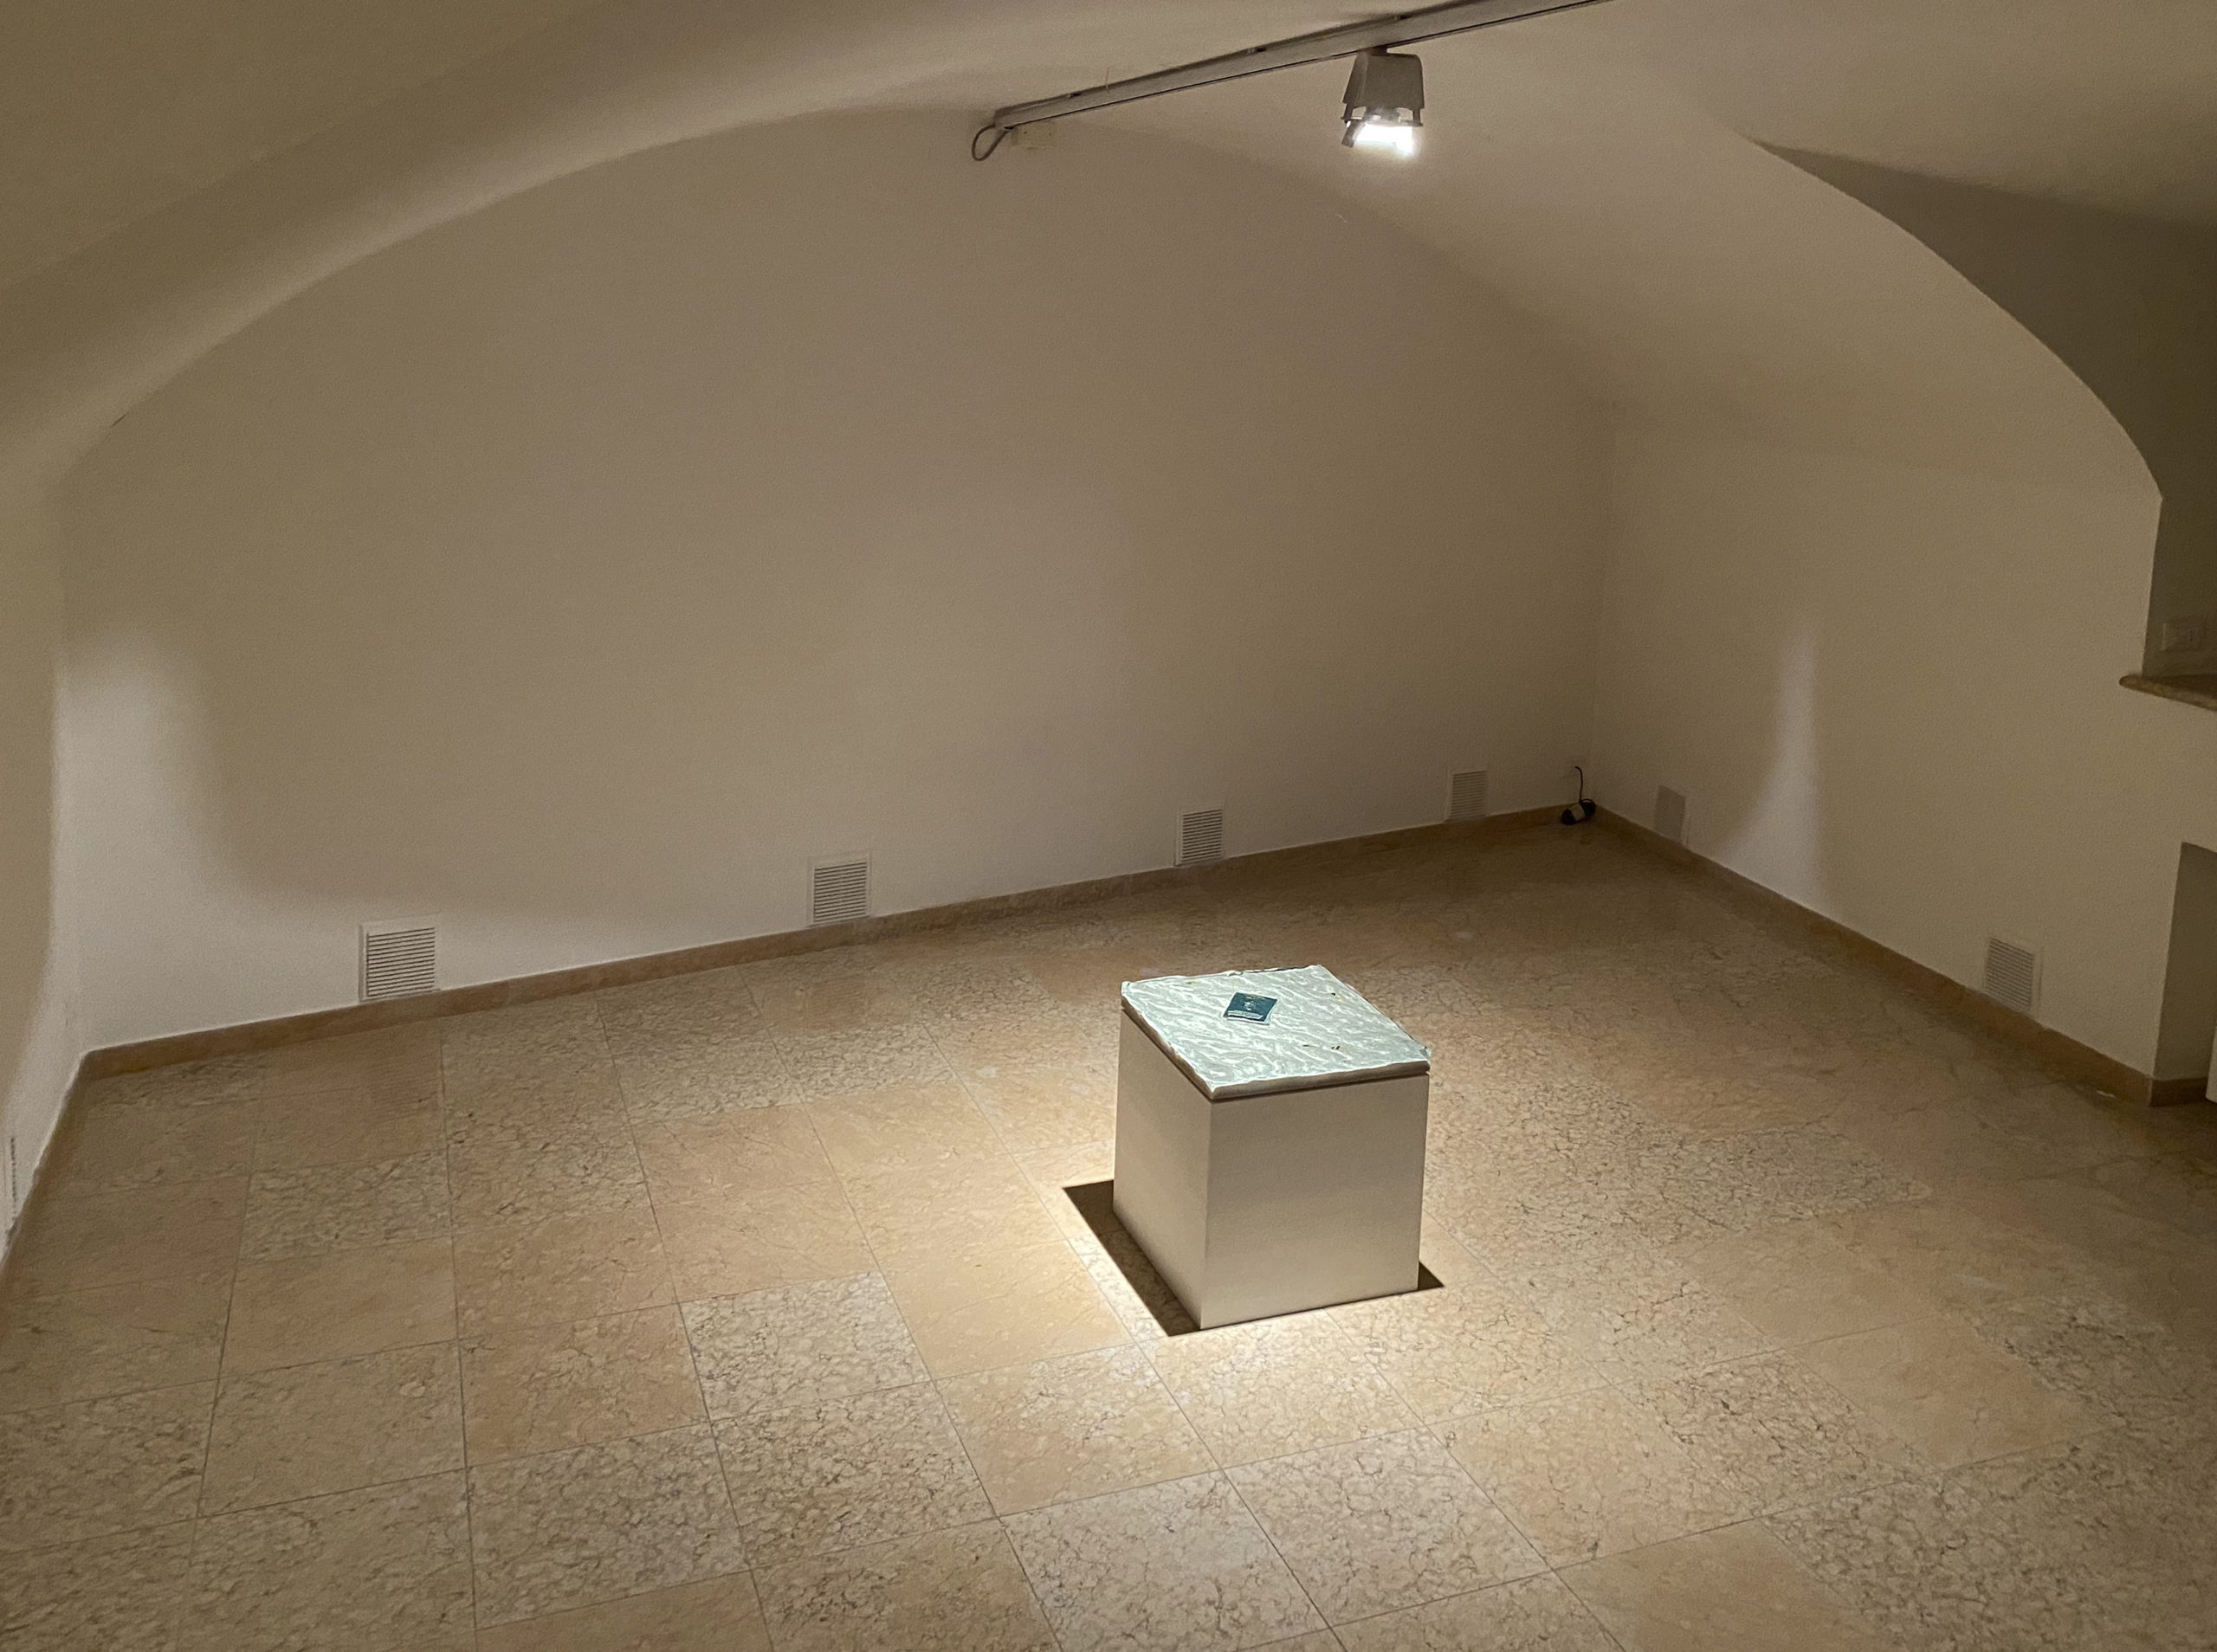 Francesco Garbelli, 'Mare Nostrum?' 2021, resina, sabbia, sassi, conchiglie, passaporto, 60x60x5 cm